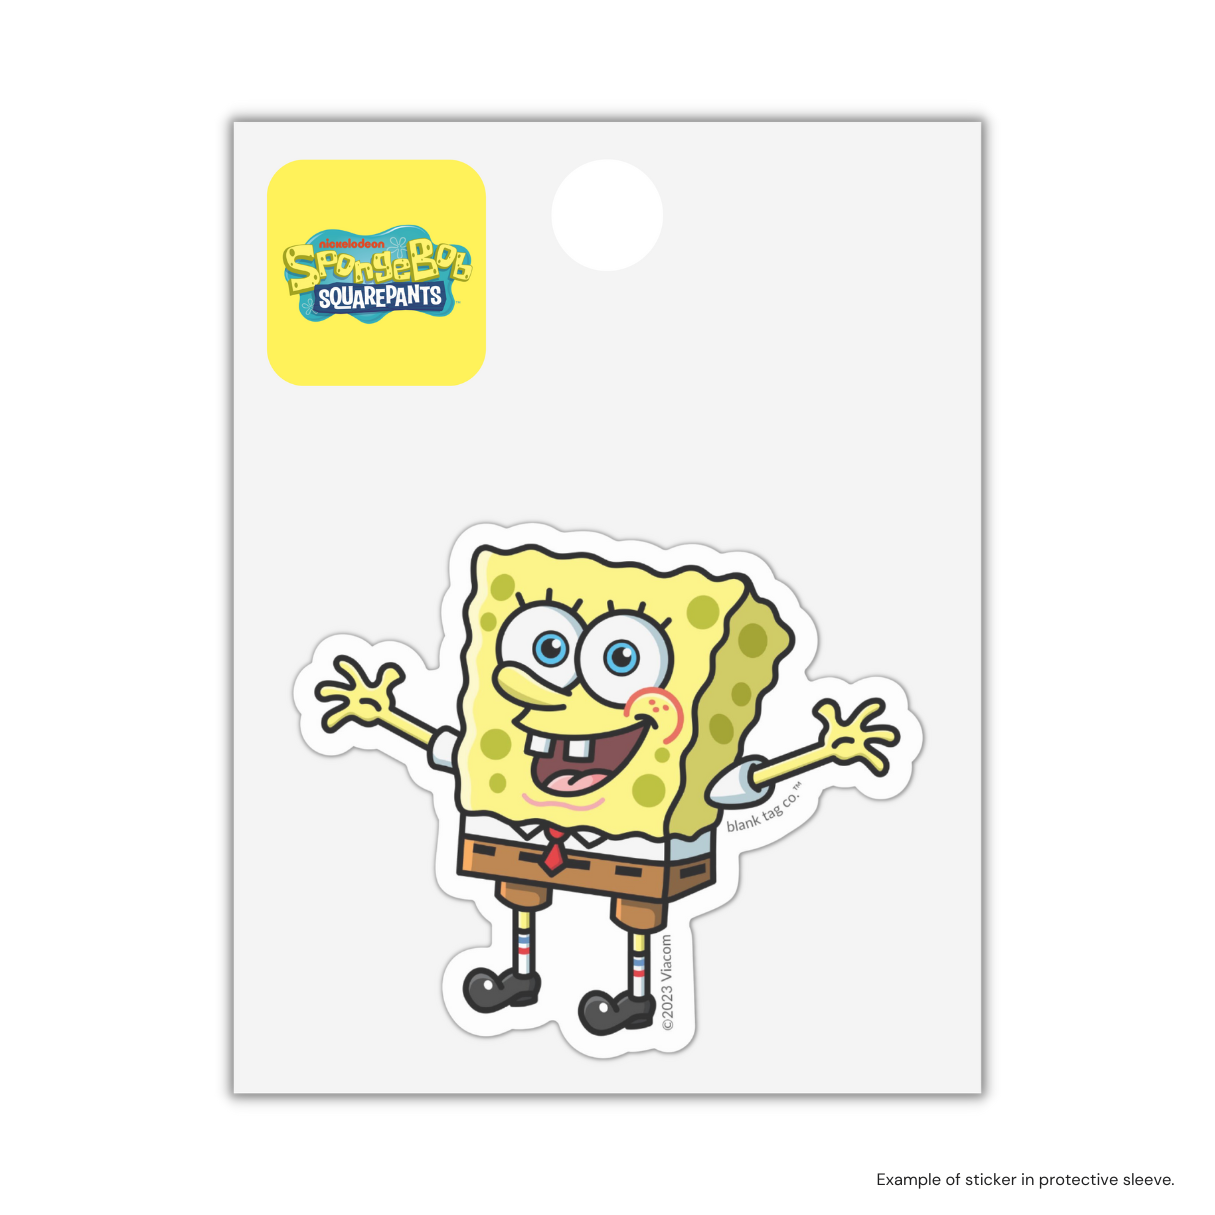 The SpongeBob SquarePants Sticker